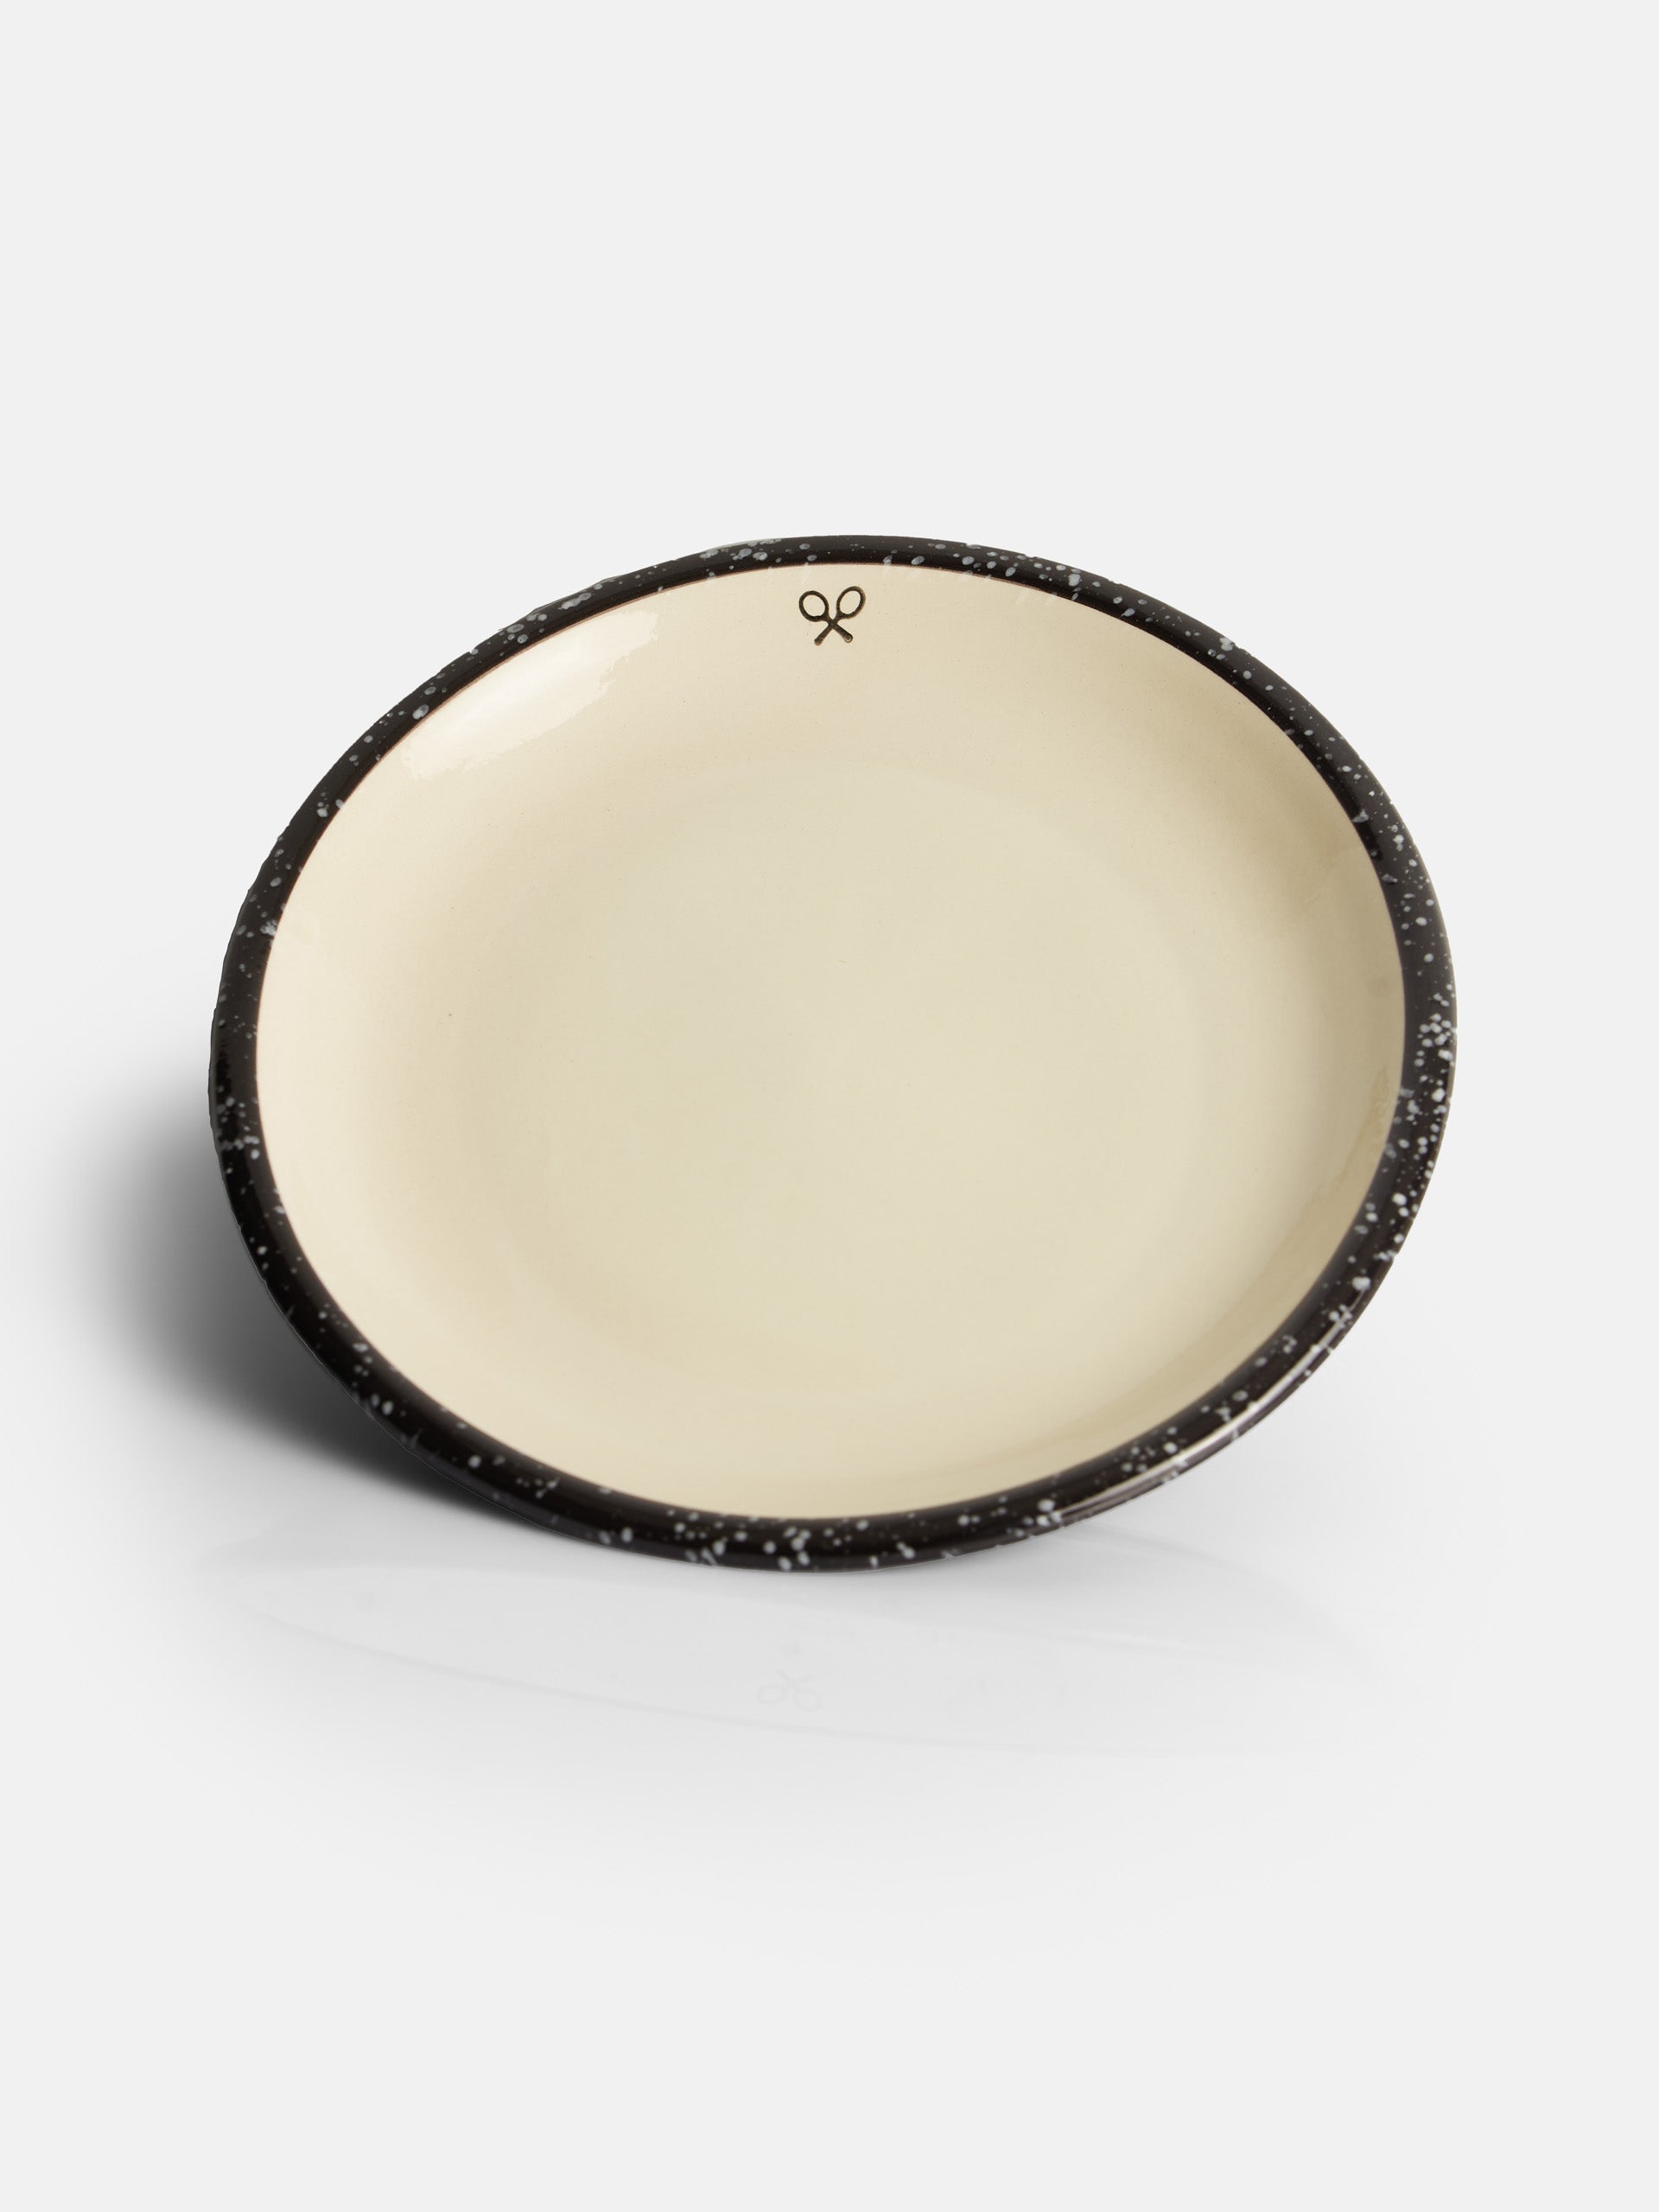 Two-tone enamel ceramic flat plate